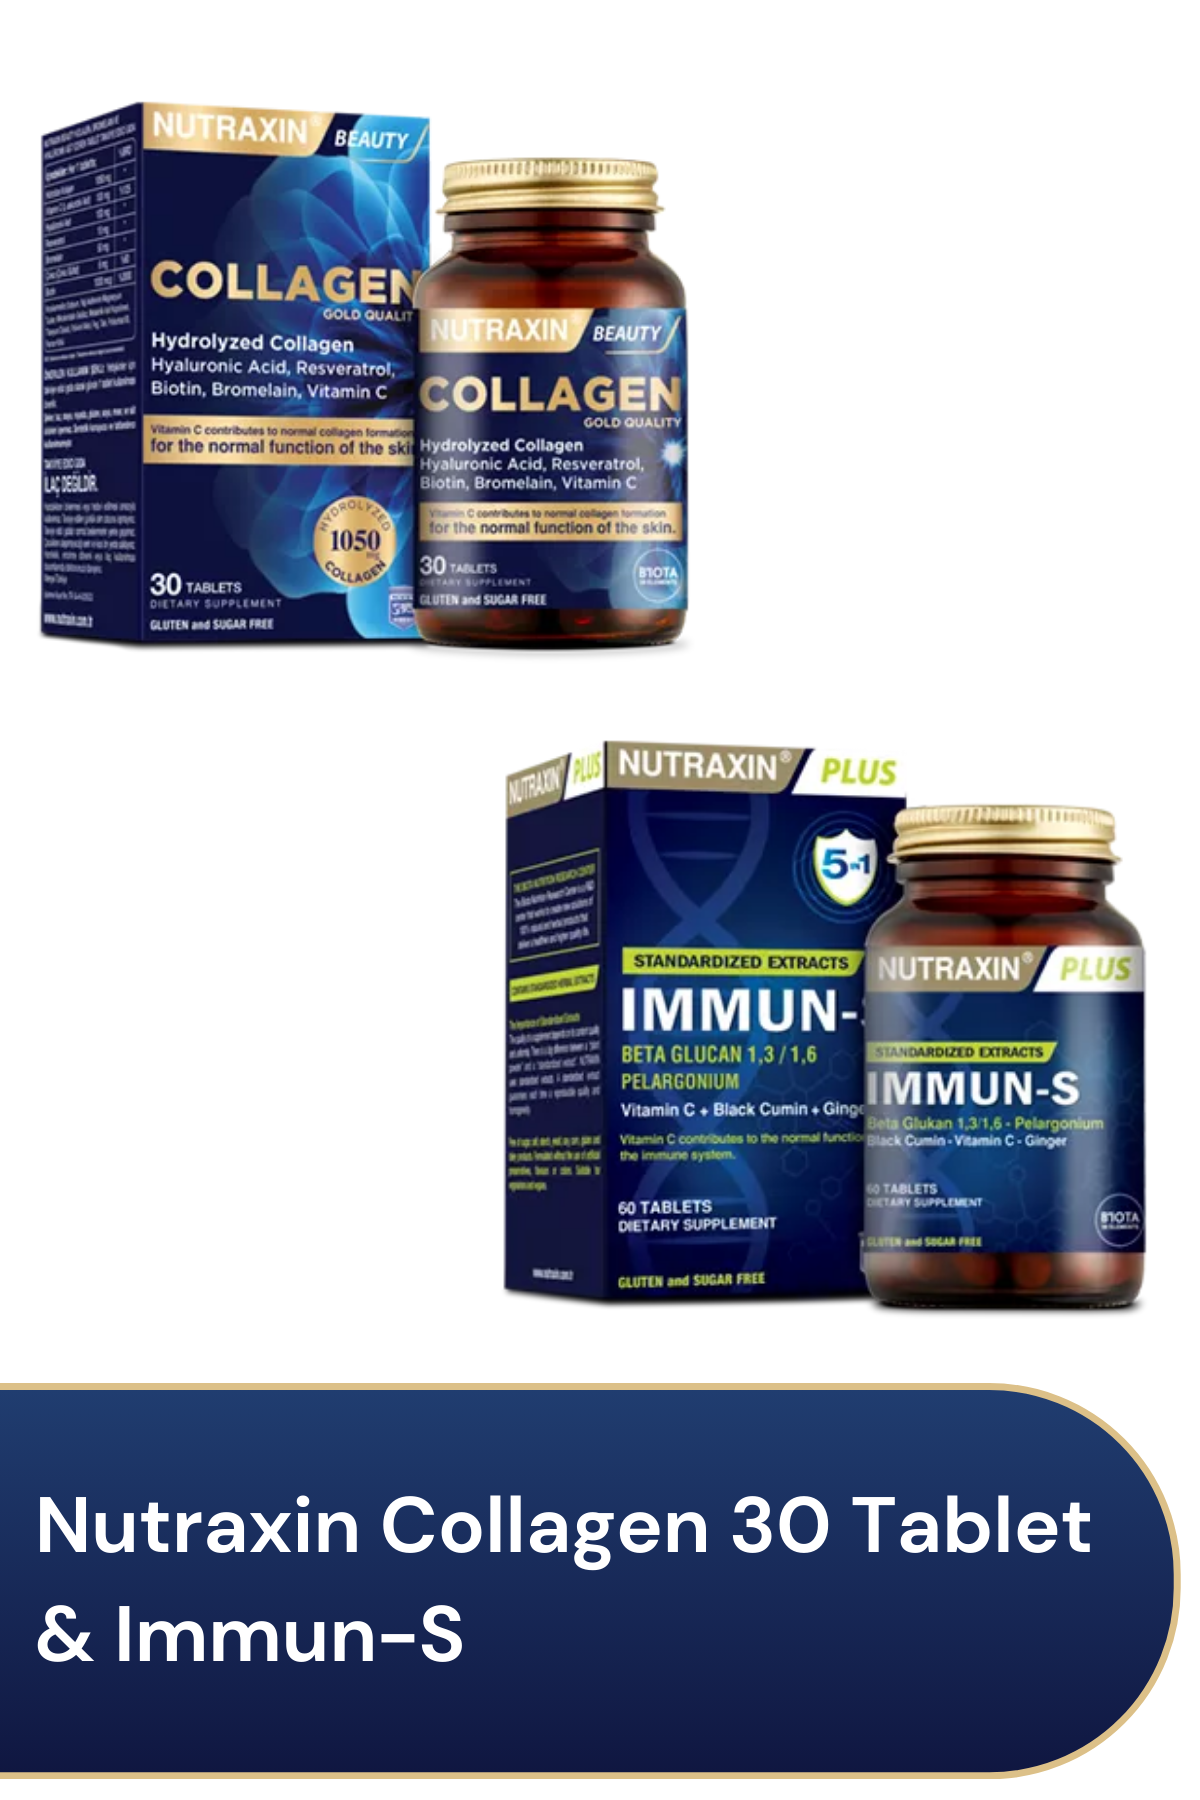 Nutraxin Collagen 30 Tablet & Immun-S